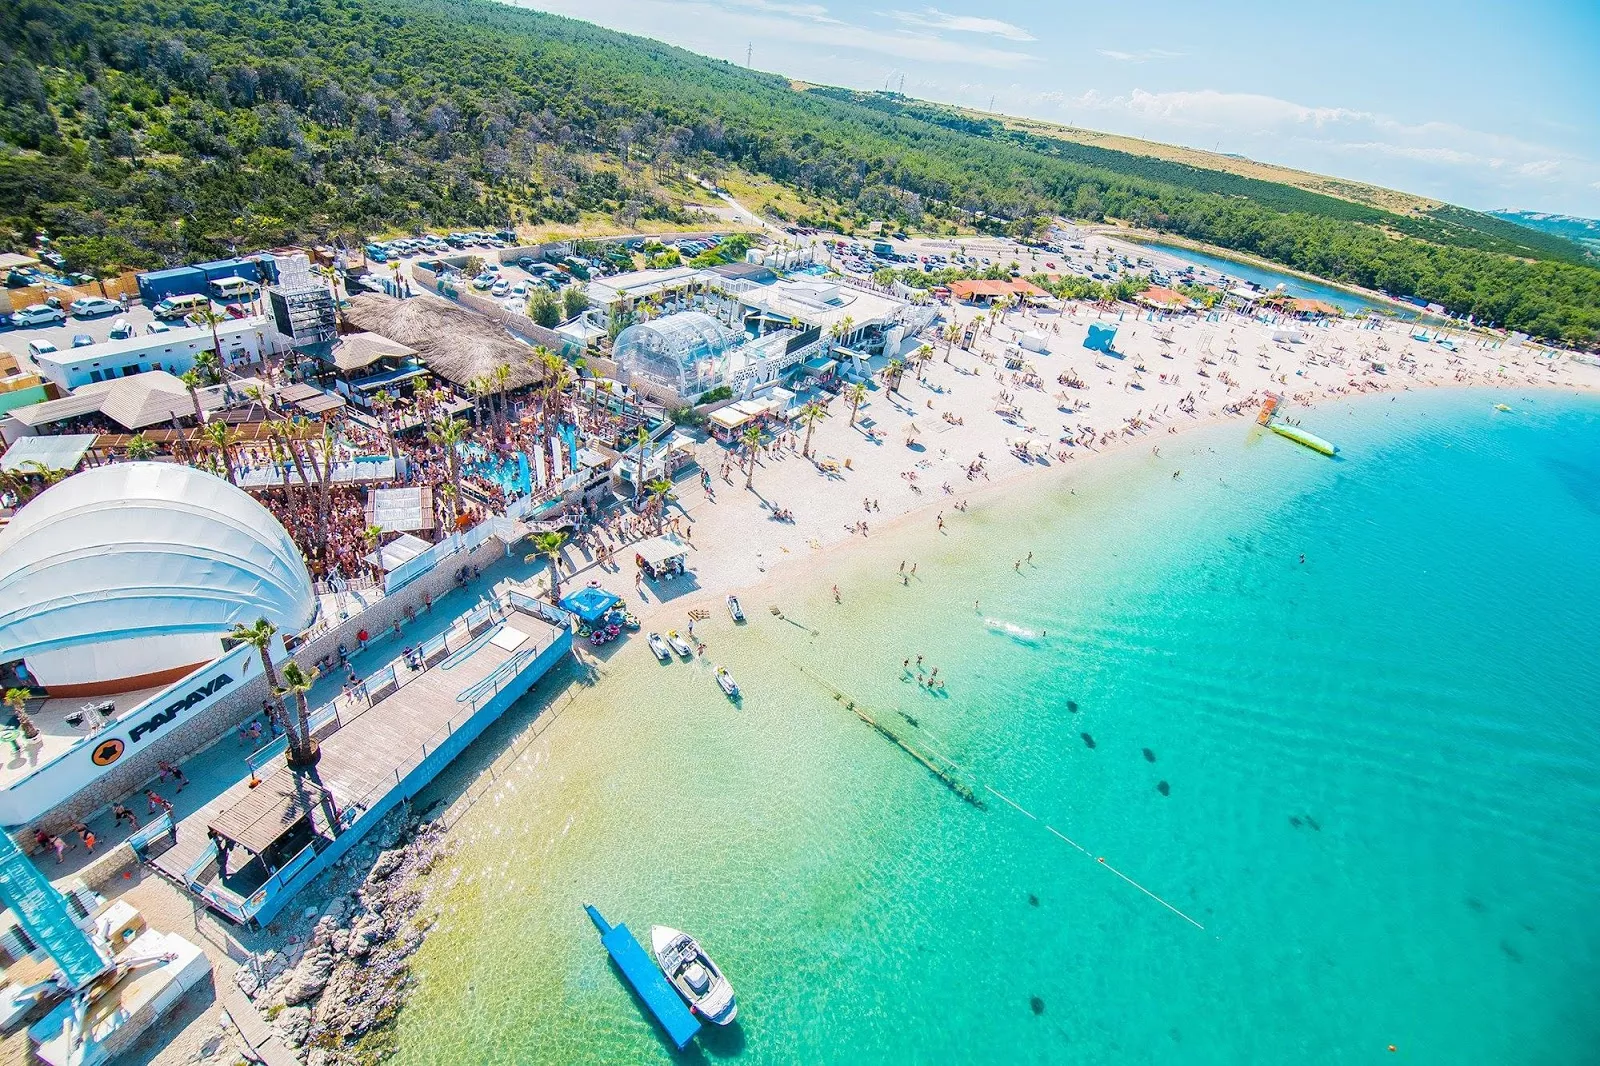 Zrce Festival Beach in Croatia, Europe | Beaches - Rated 3.8